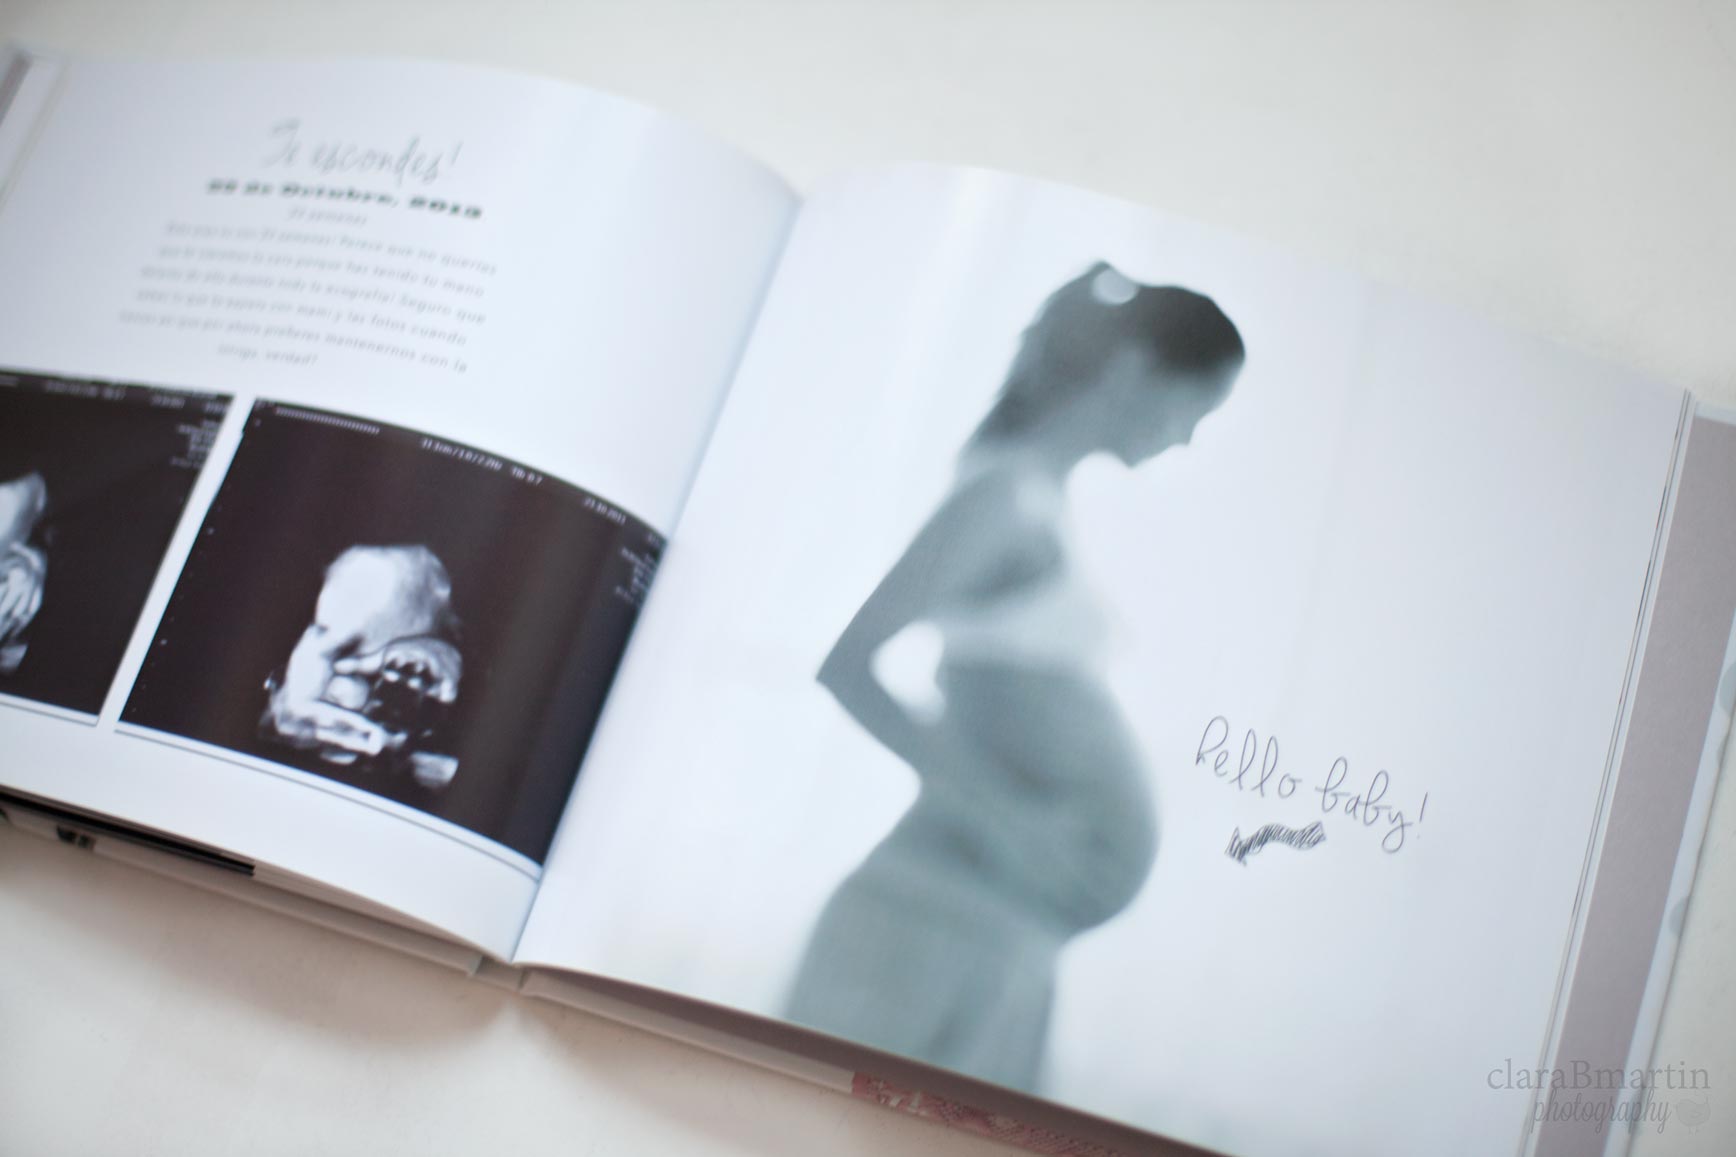 Libro-de- embarazo-Blurb-clarabmartin